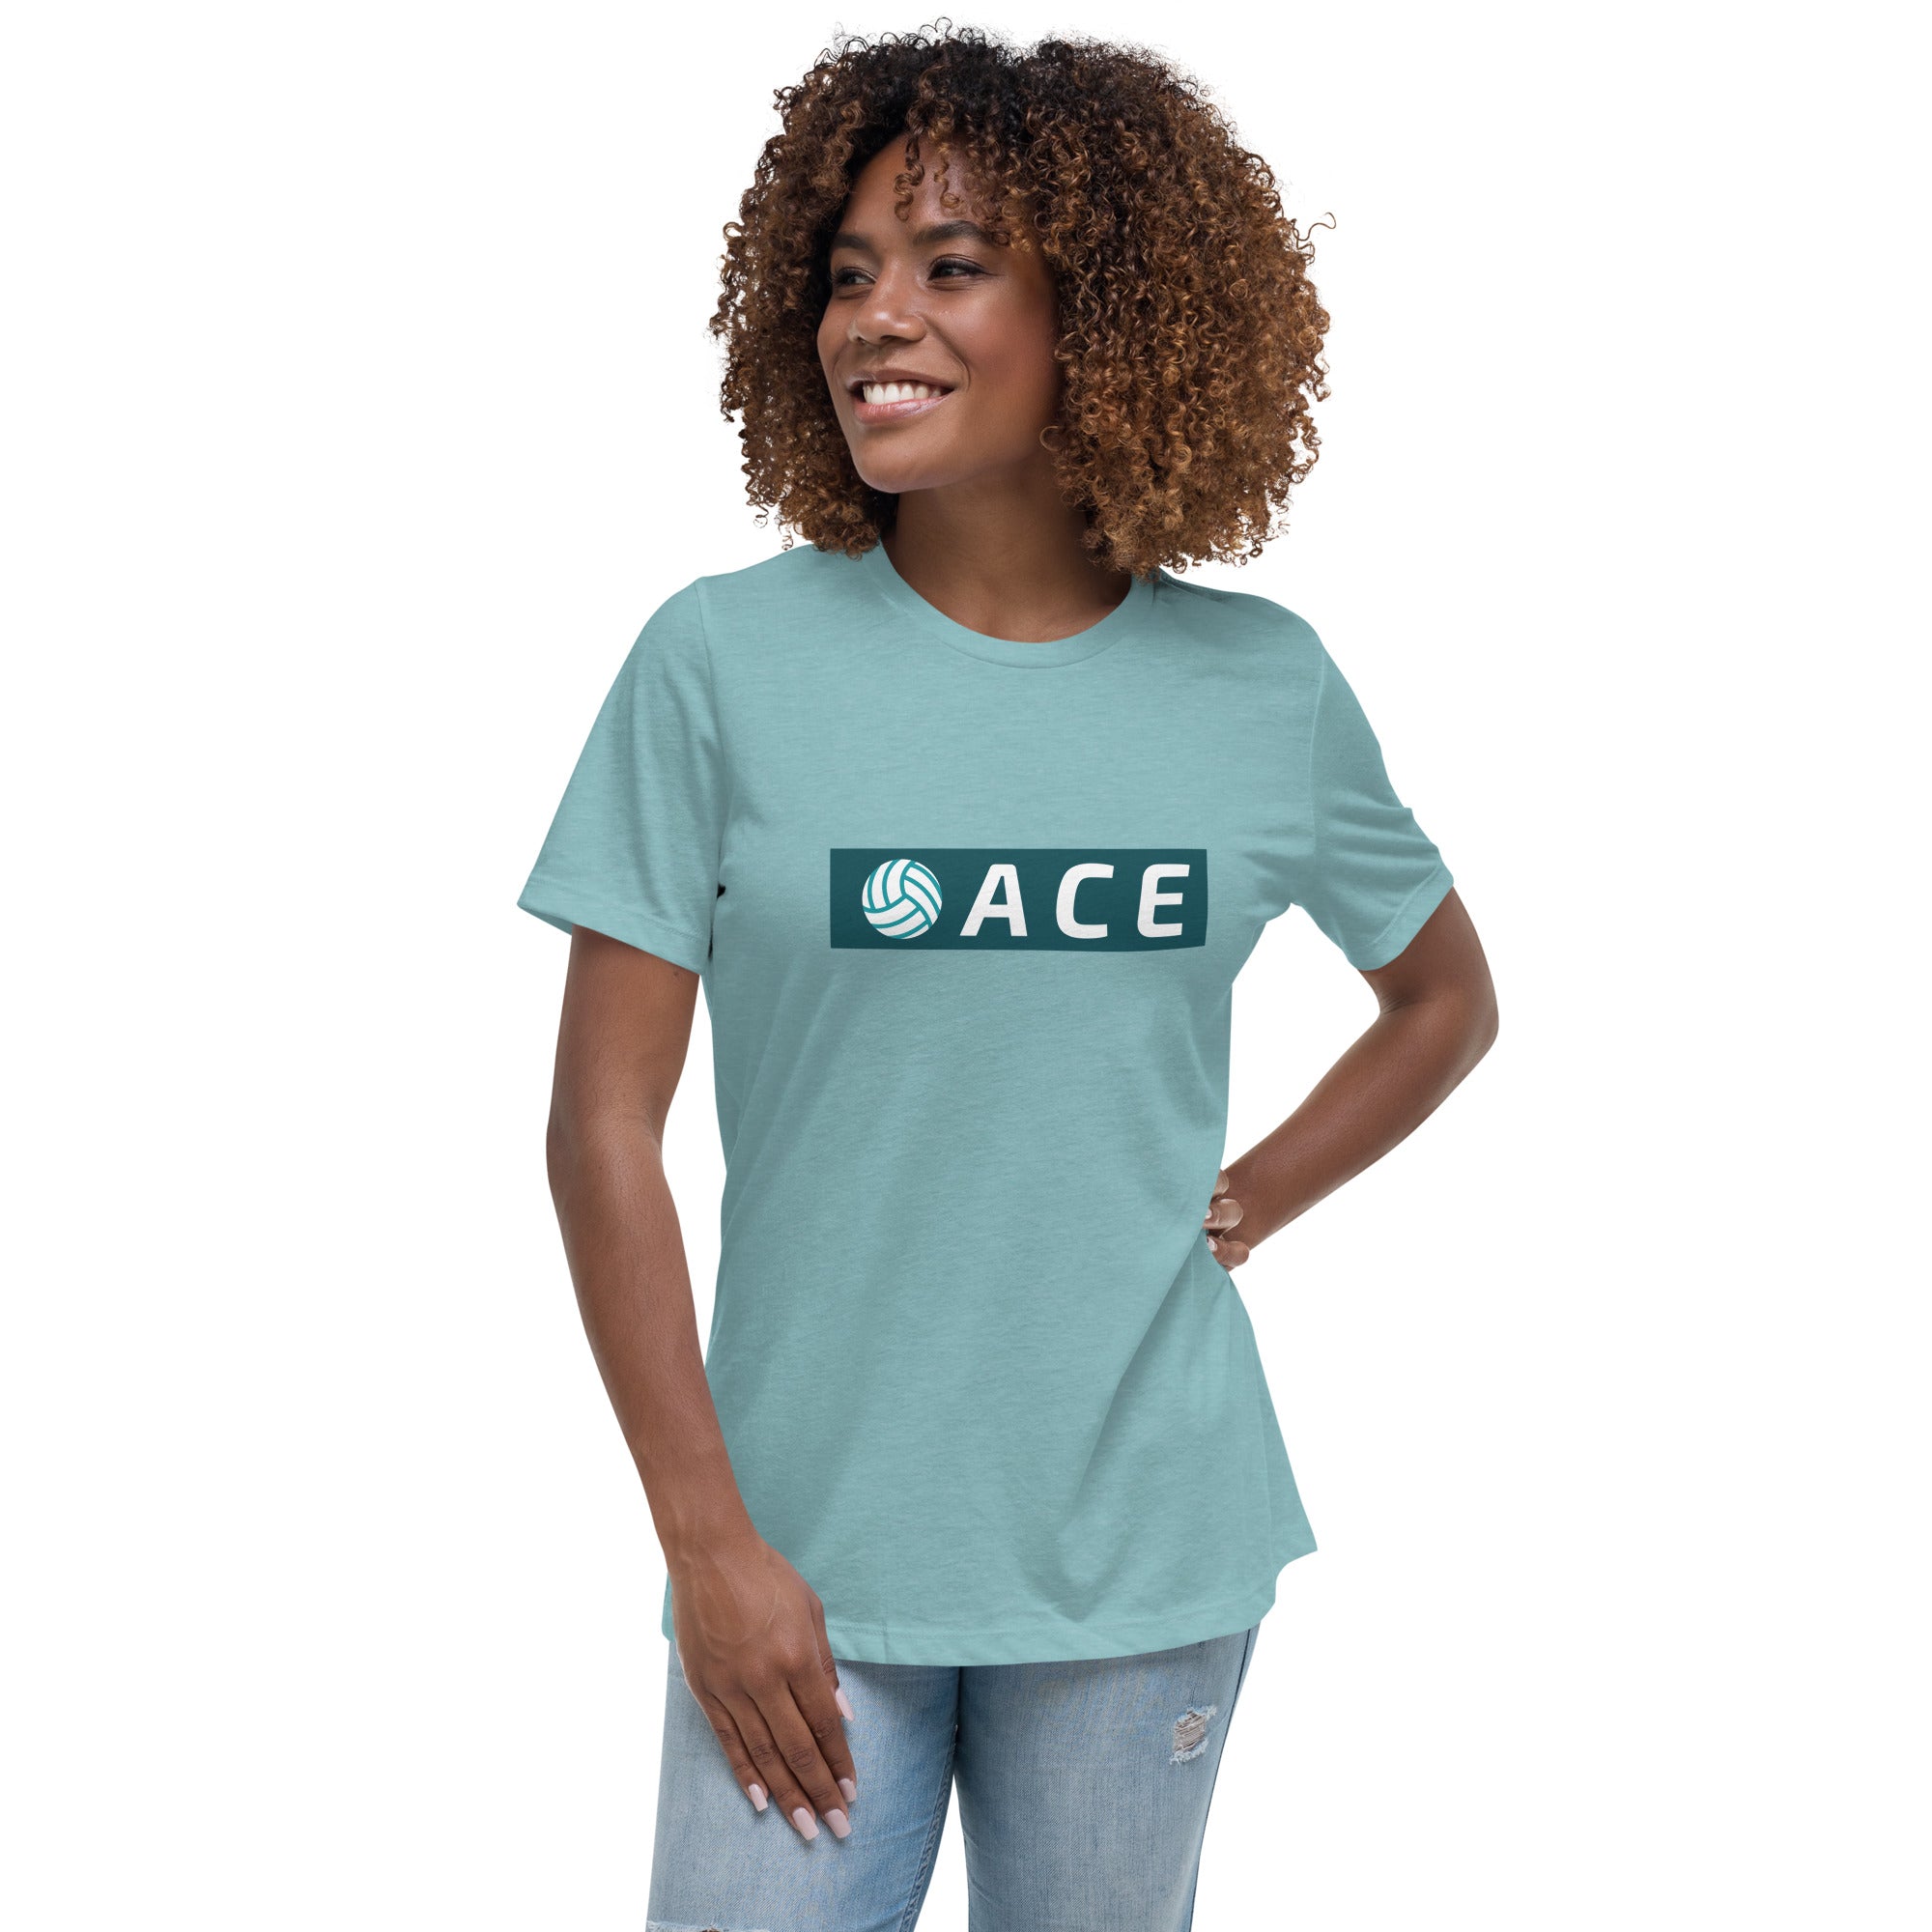 Ace Women's Premium T-Shirt